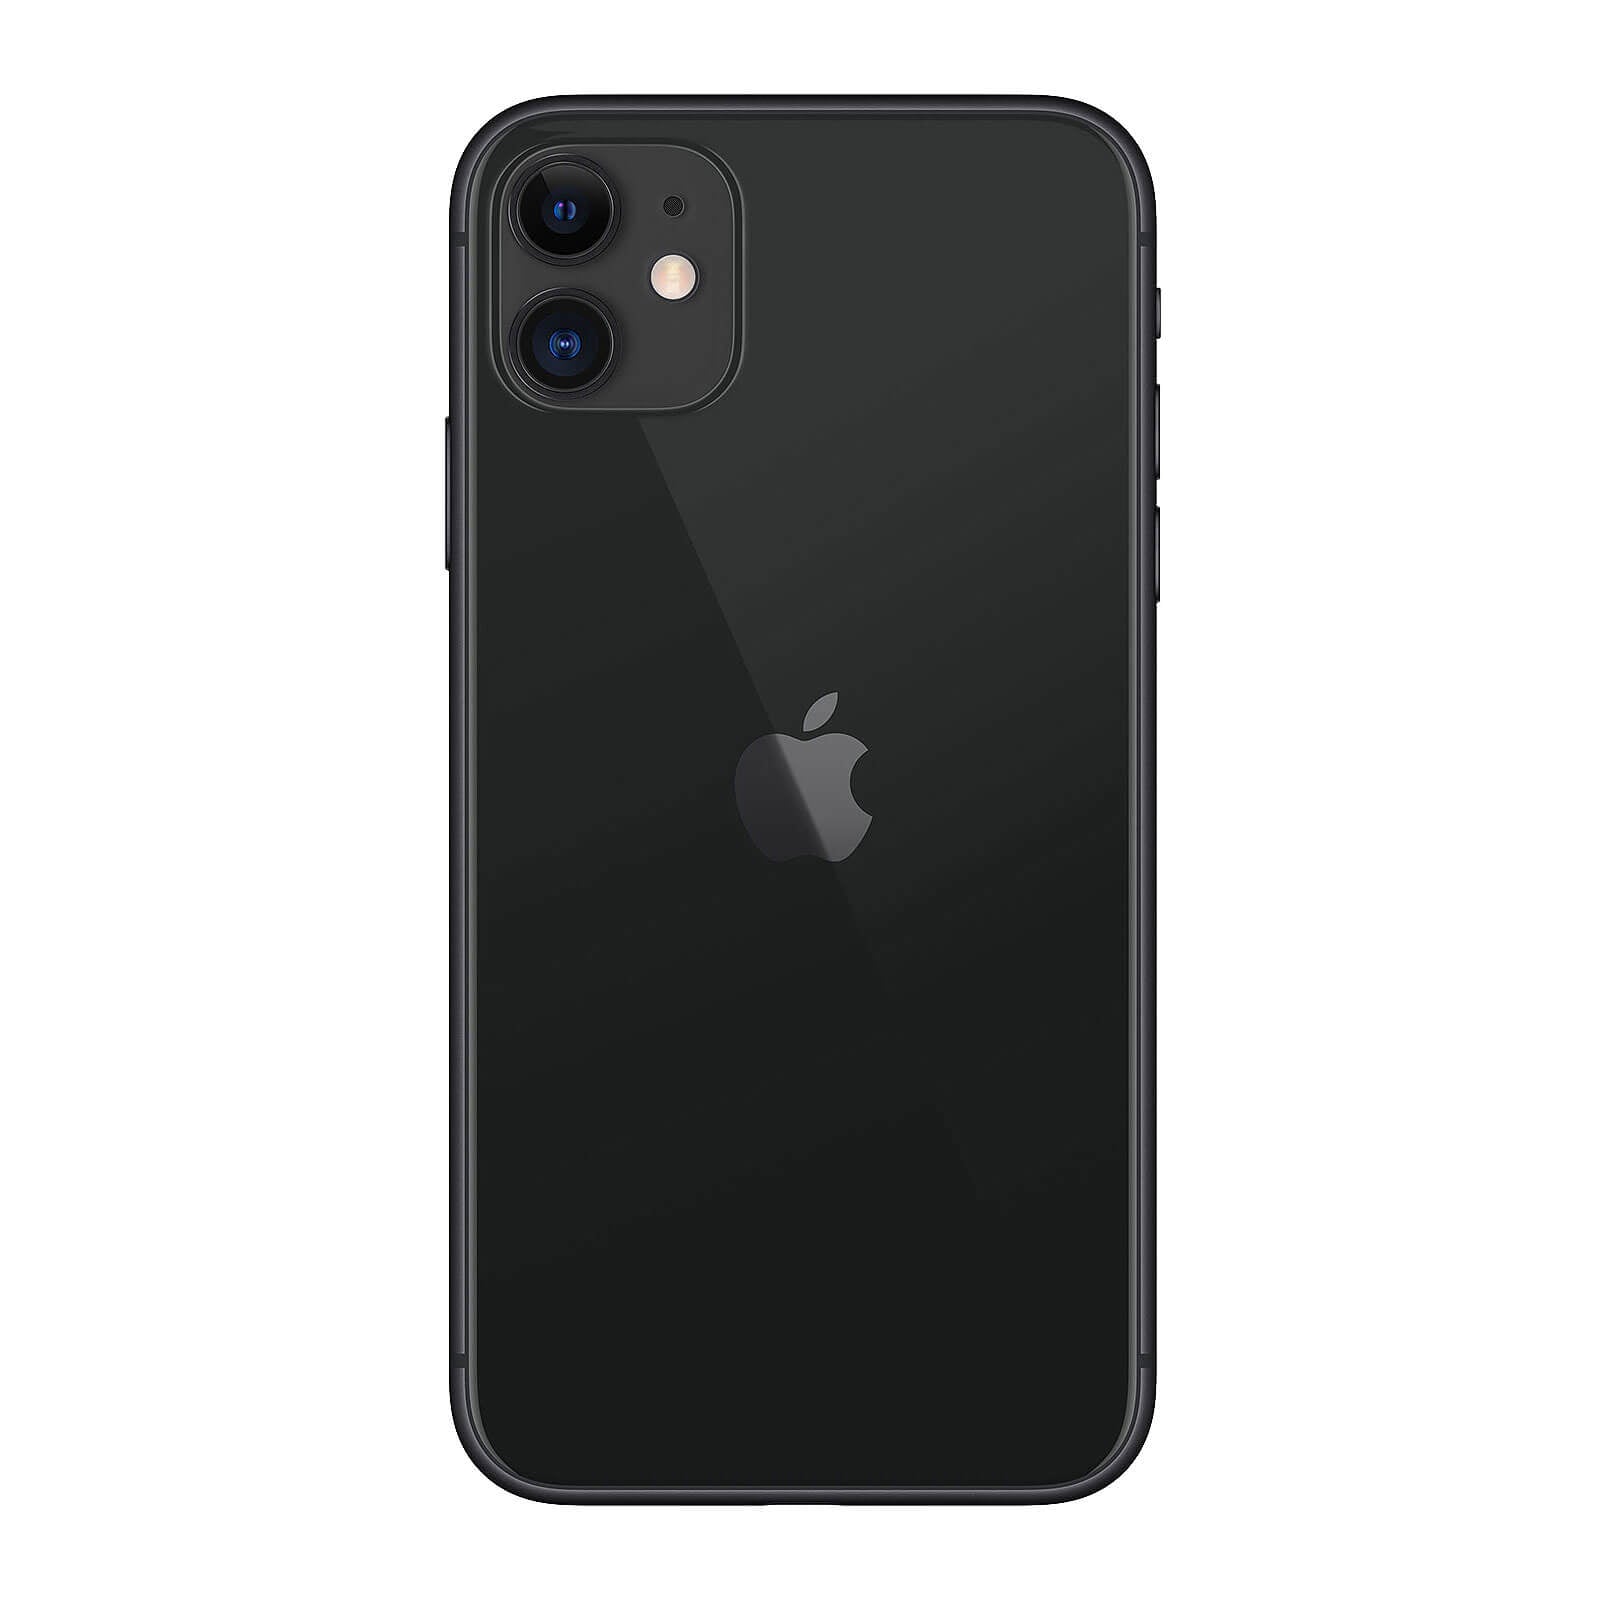 Apple iPhone 11 64GB Black Very Good - Unlocked - Unlocked